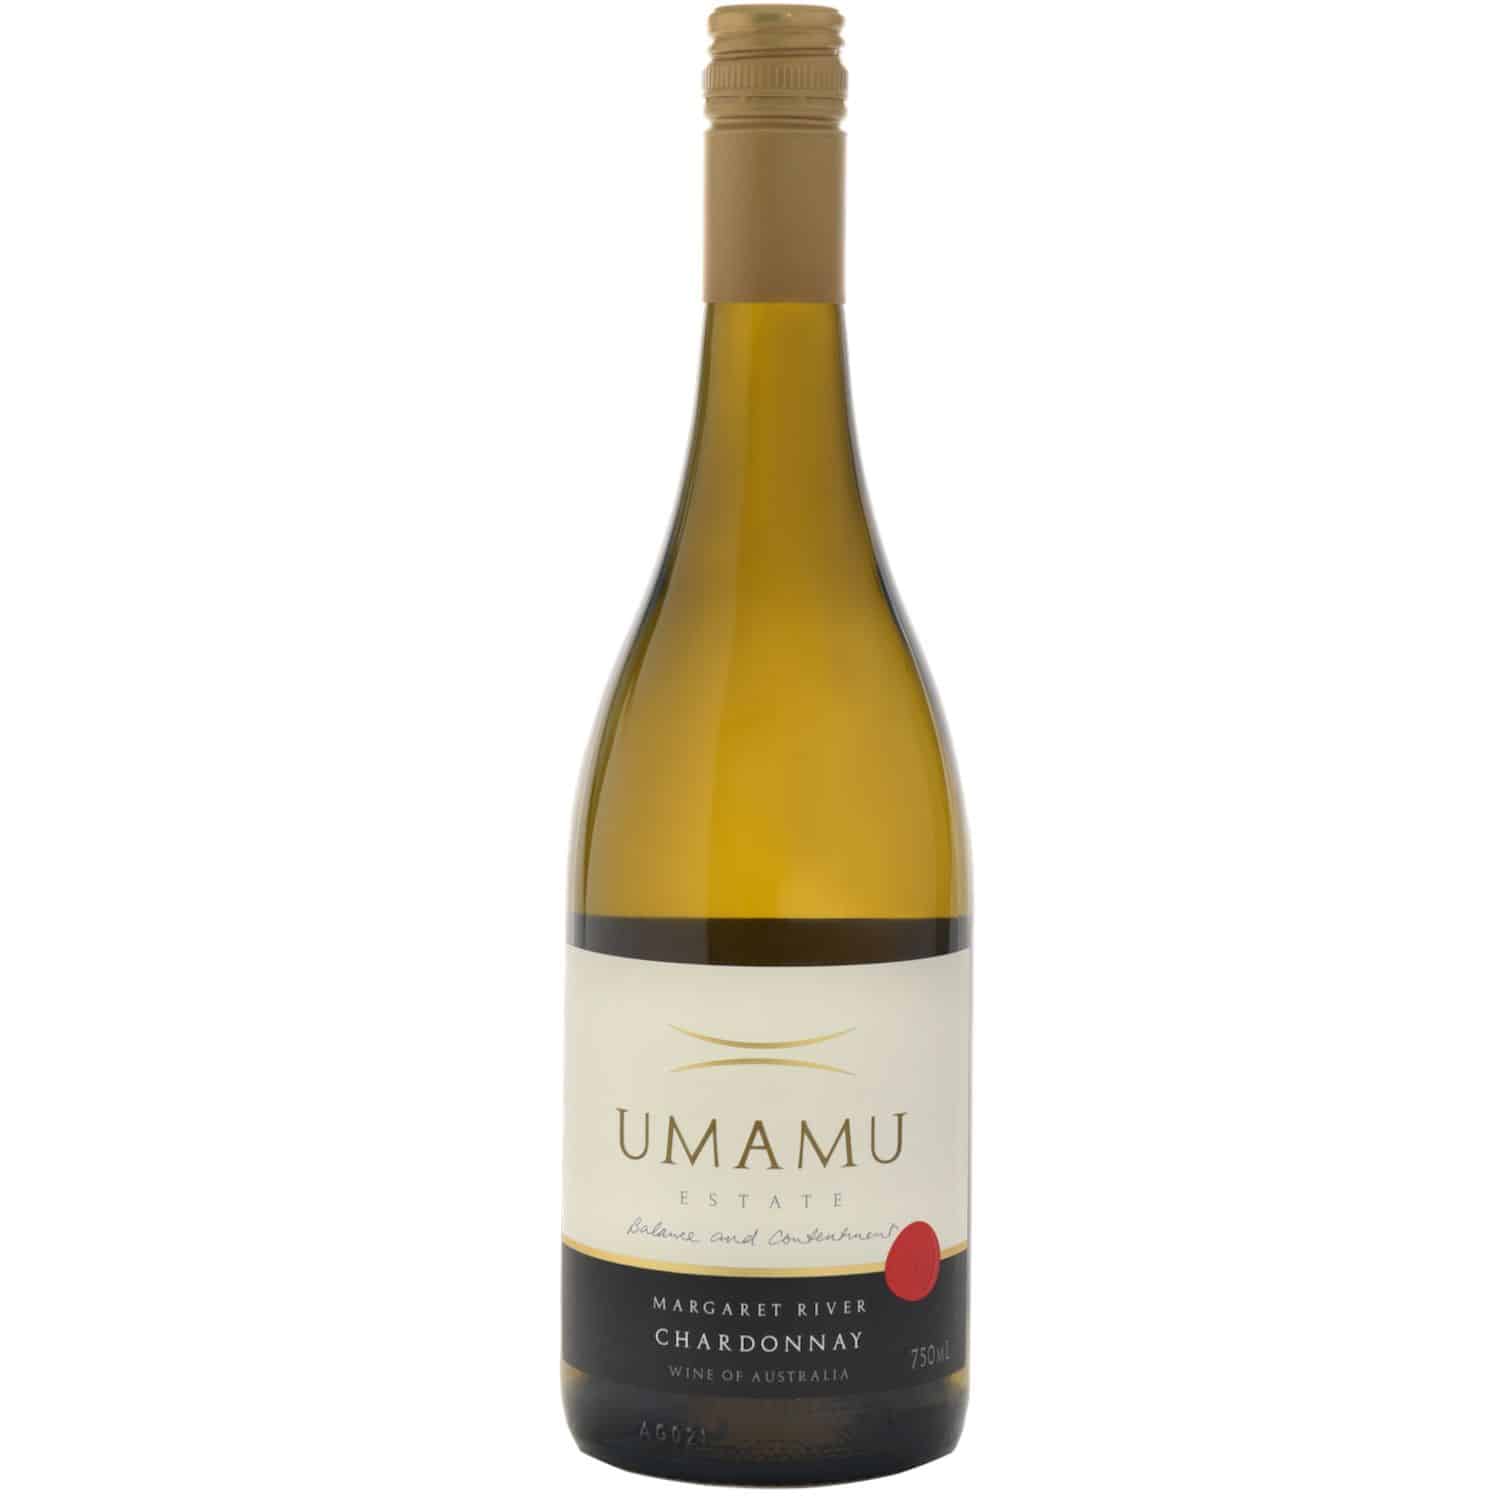 Umamu Estate Chardonnay 2018